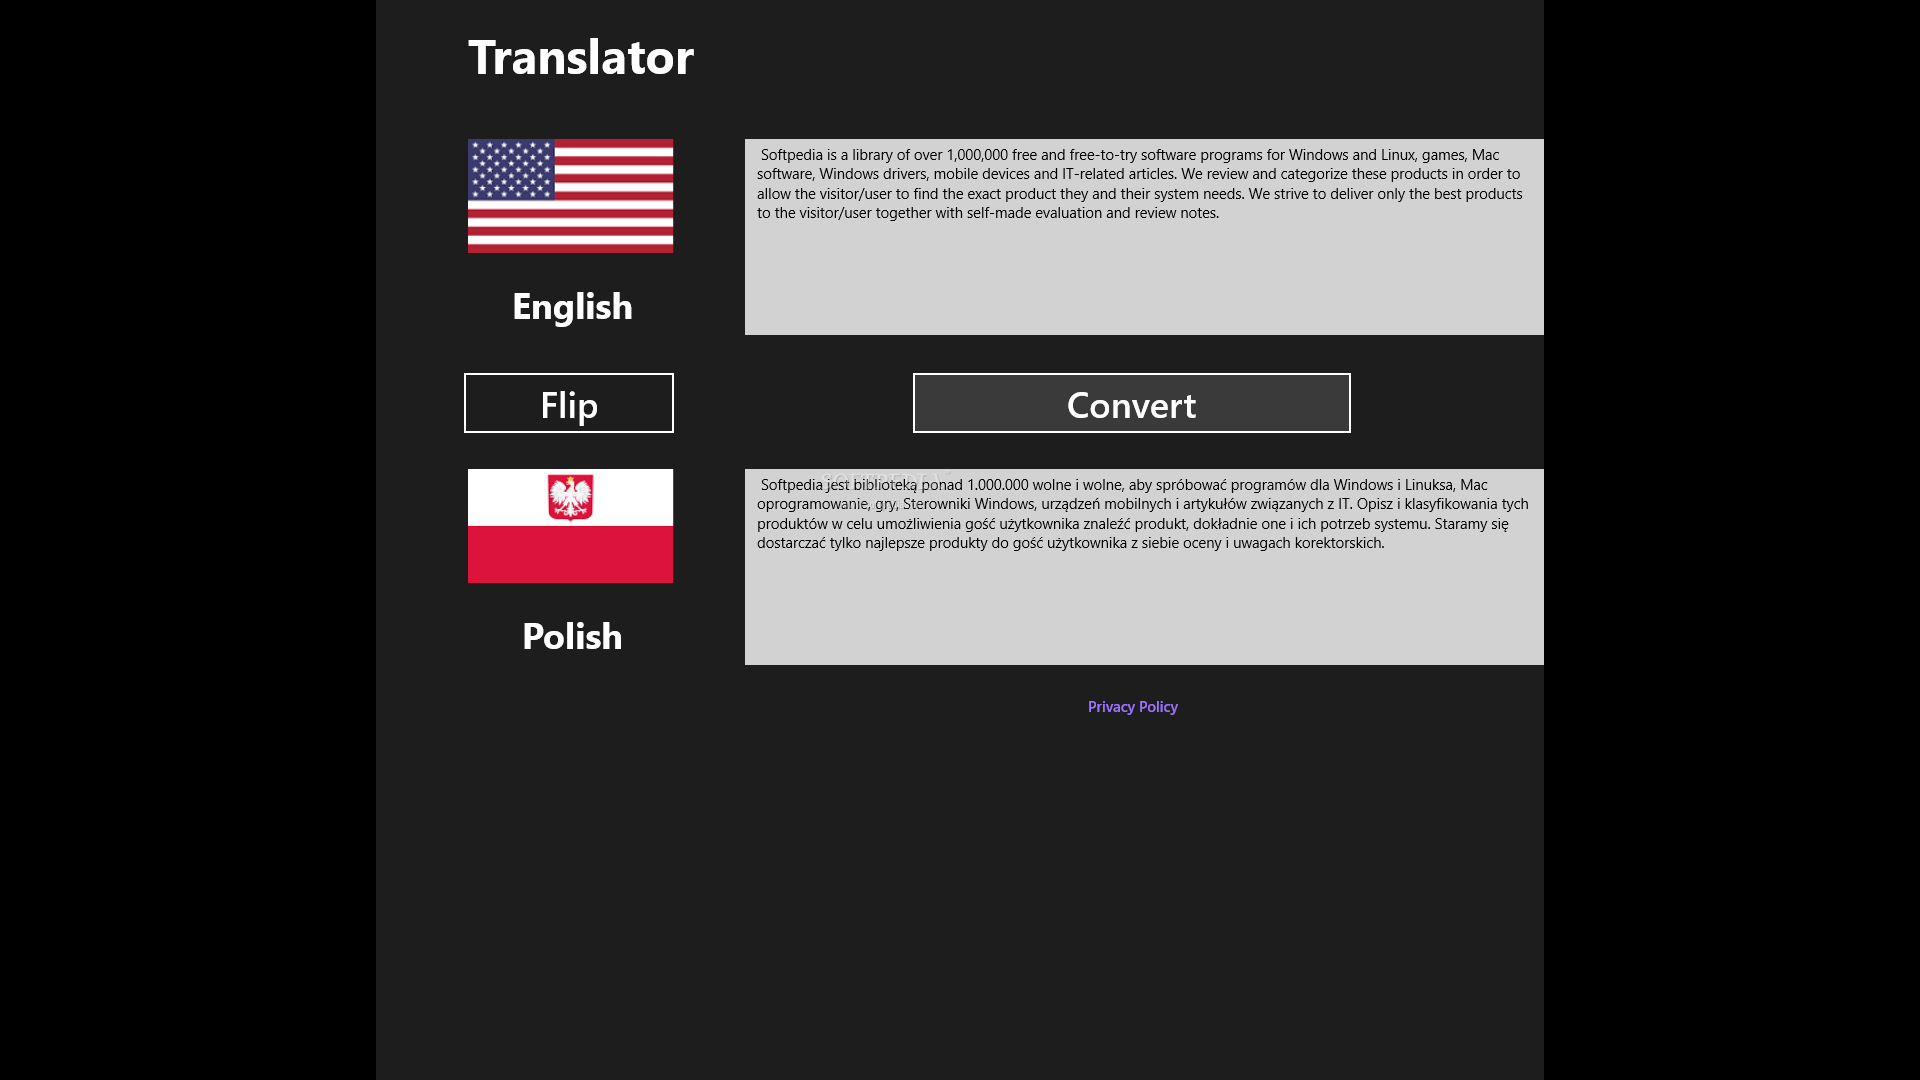 spanish polish translator